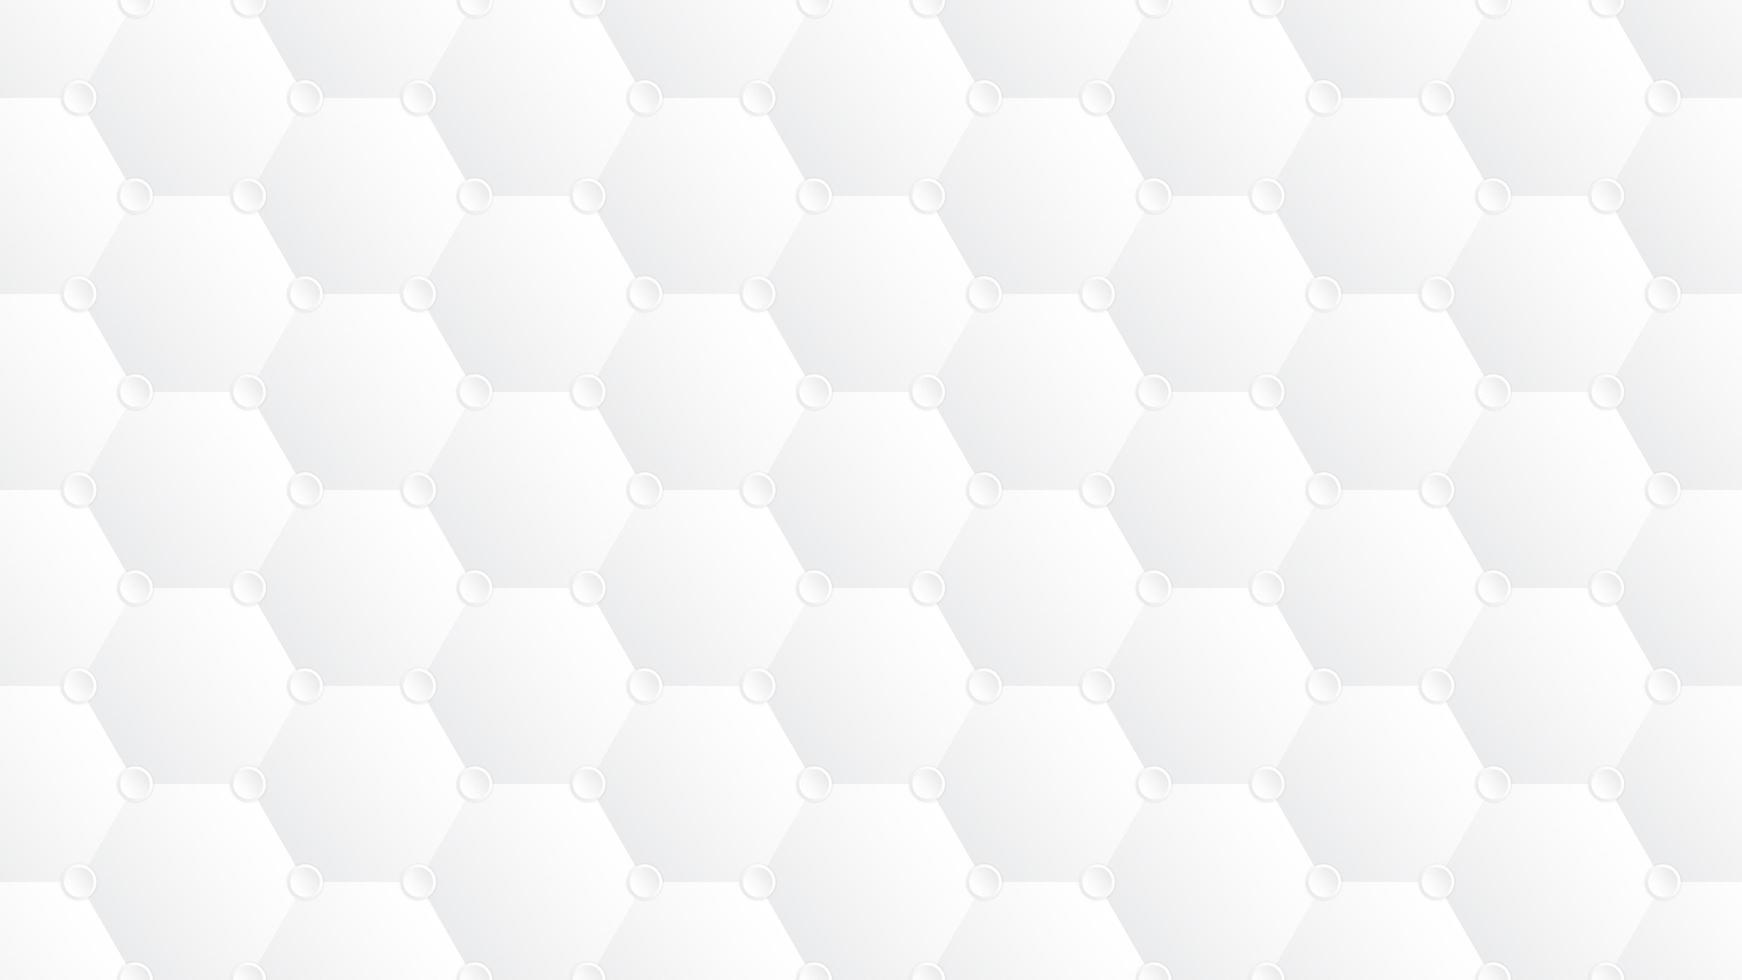 textura geométrica do favo de mel branco e cinza vetor